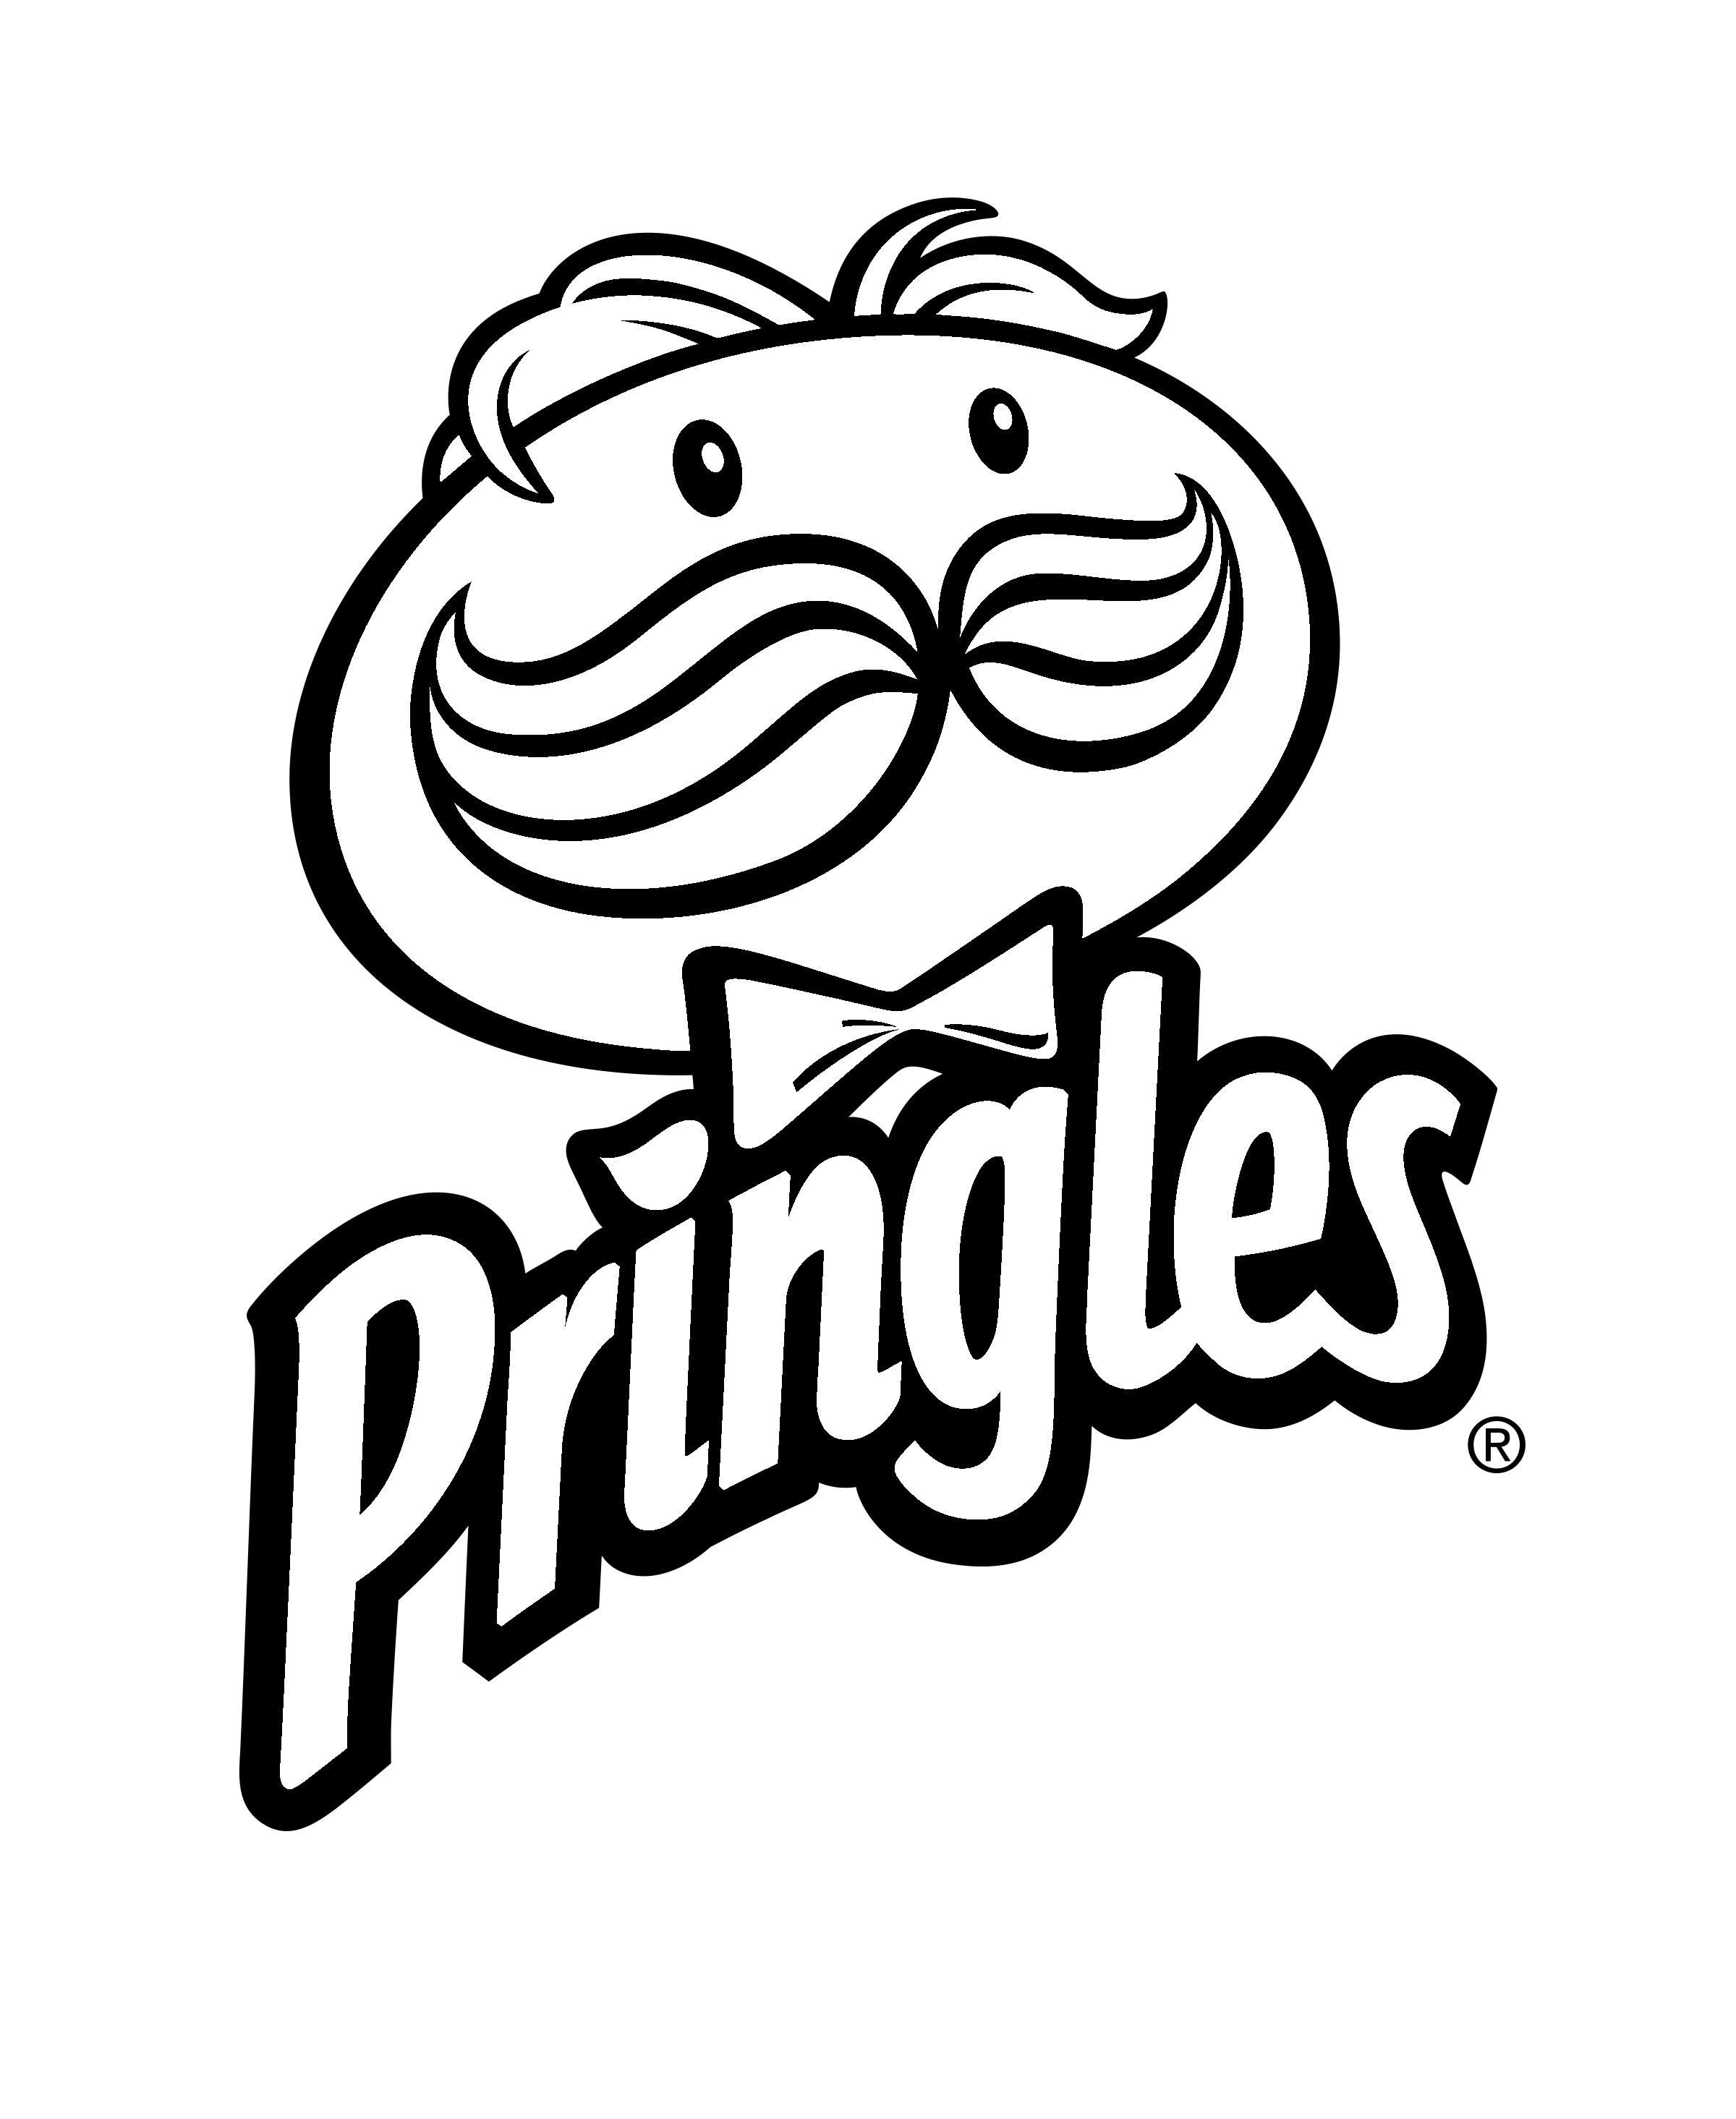 Pringles Logo - Pringles Logo PNG Transparent & SVG Vector - Freebie Supply